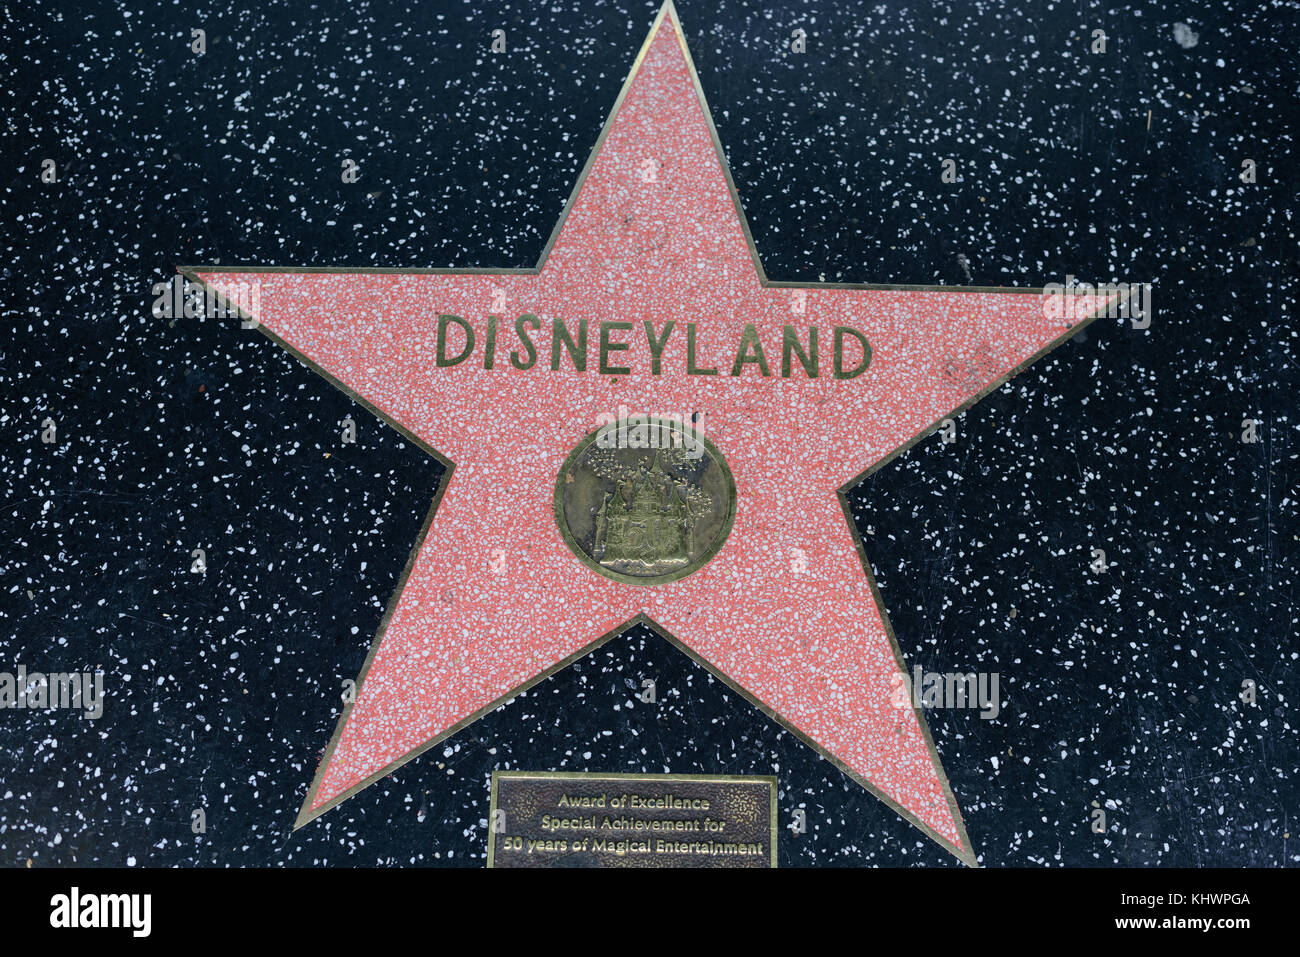 HOLLYWOOD, CA - DICEMBRE 06: Disneyland stella sulla Hollywood Walk of Fame a Hollywood, California il 6 dicembre 2016. Foto Stock